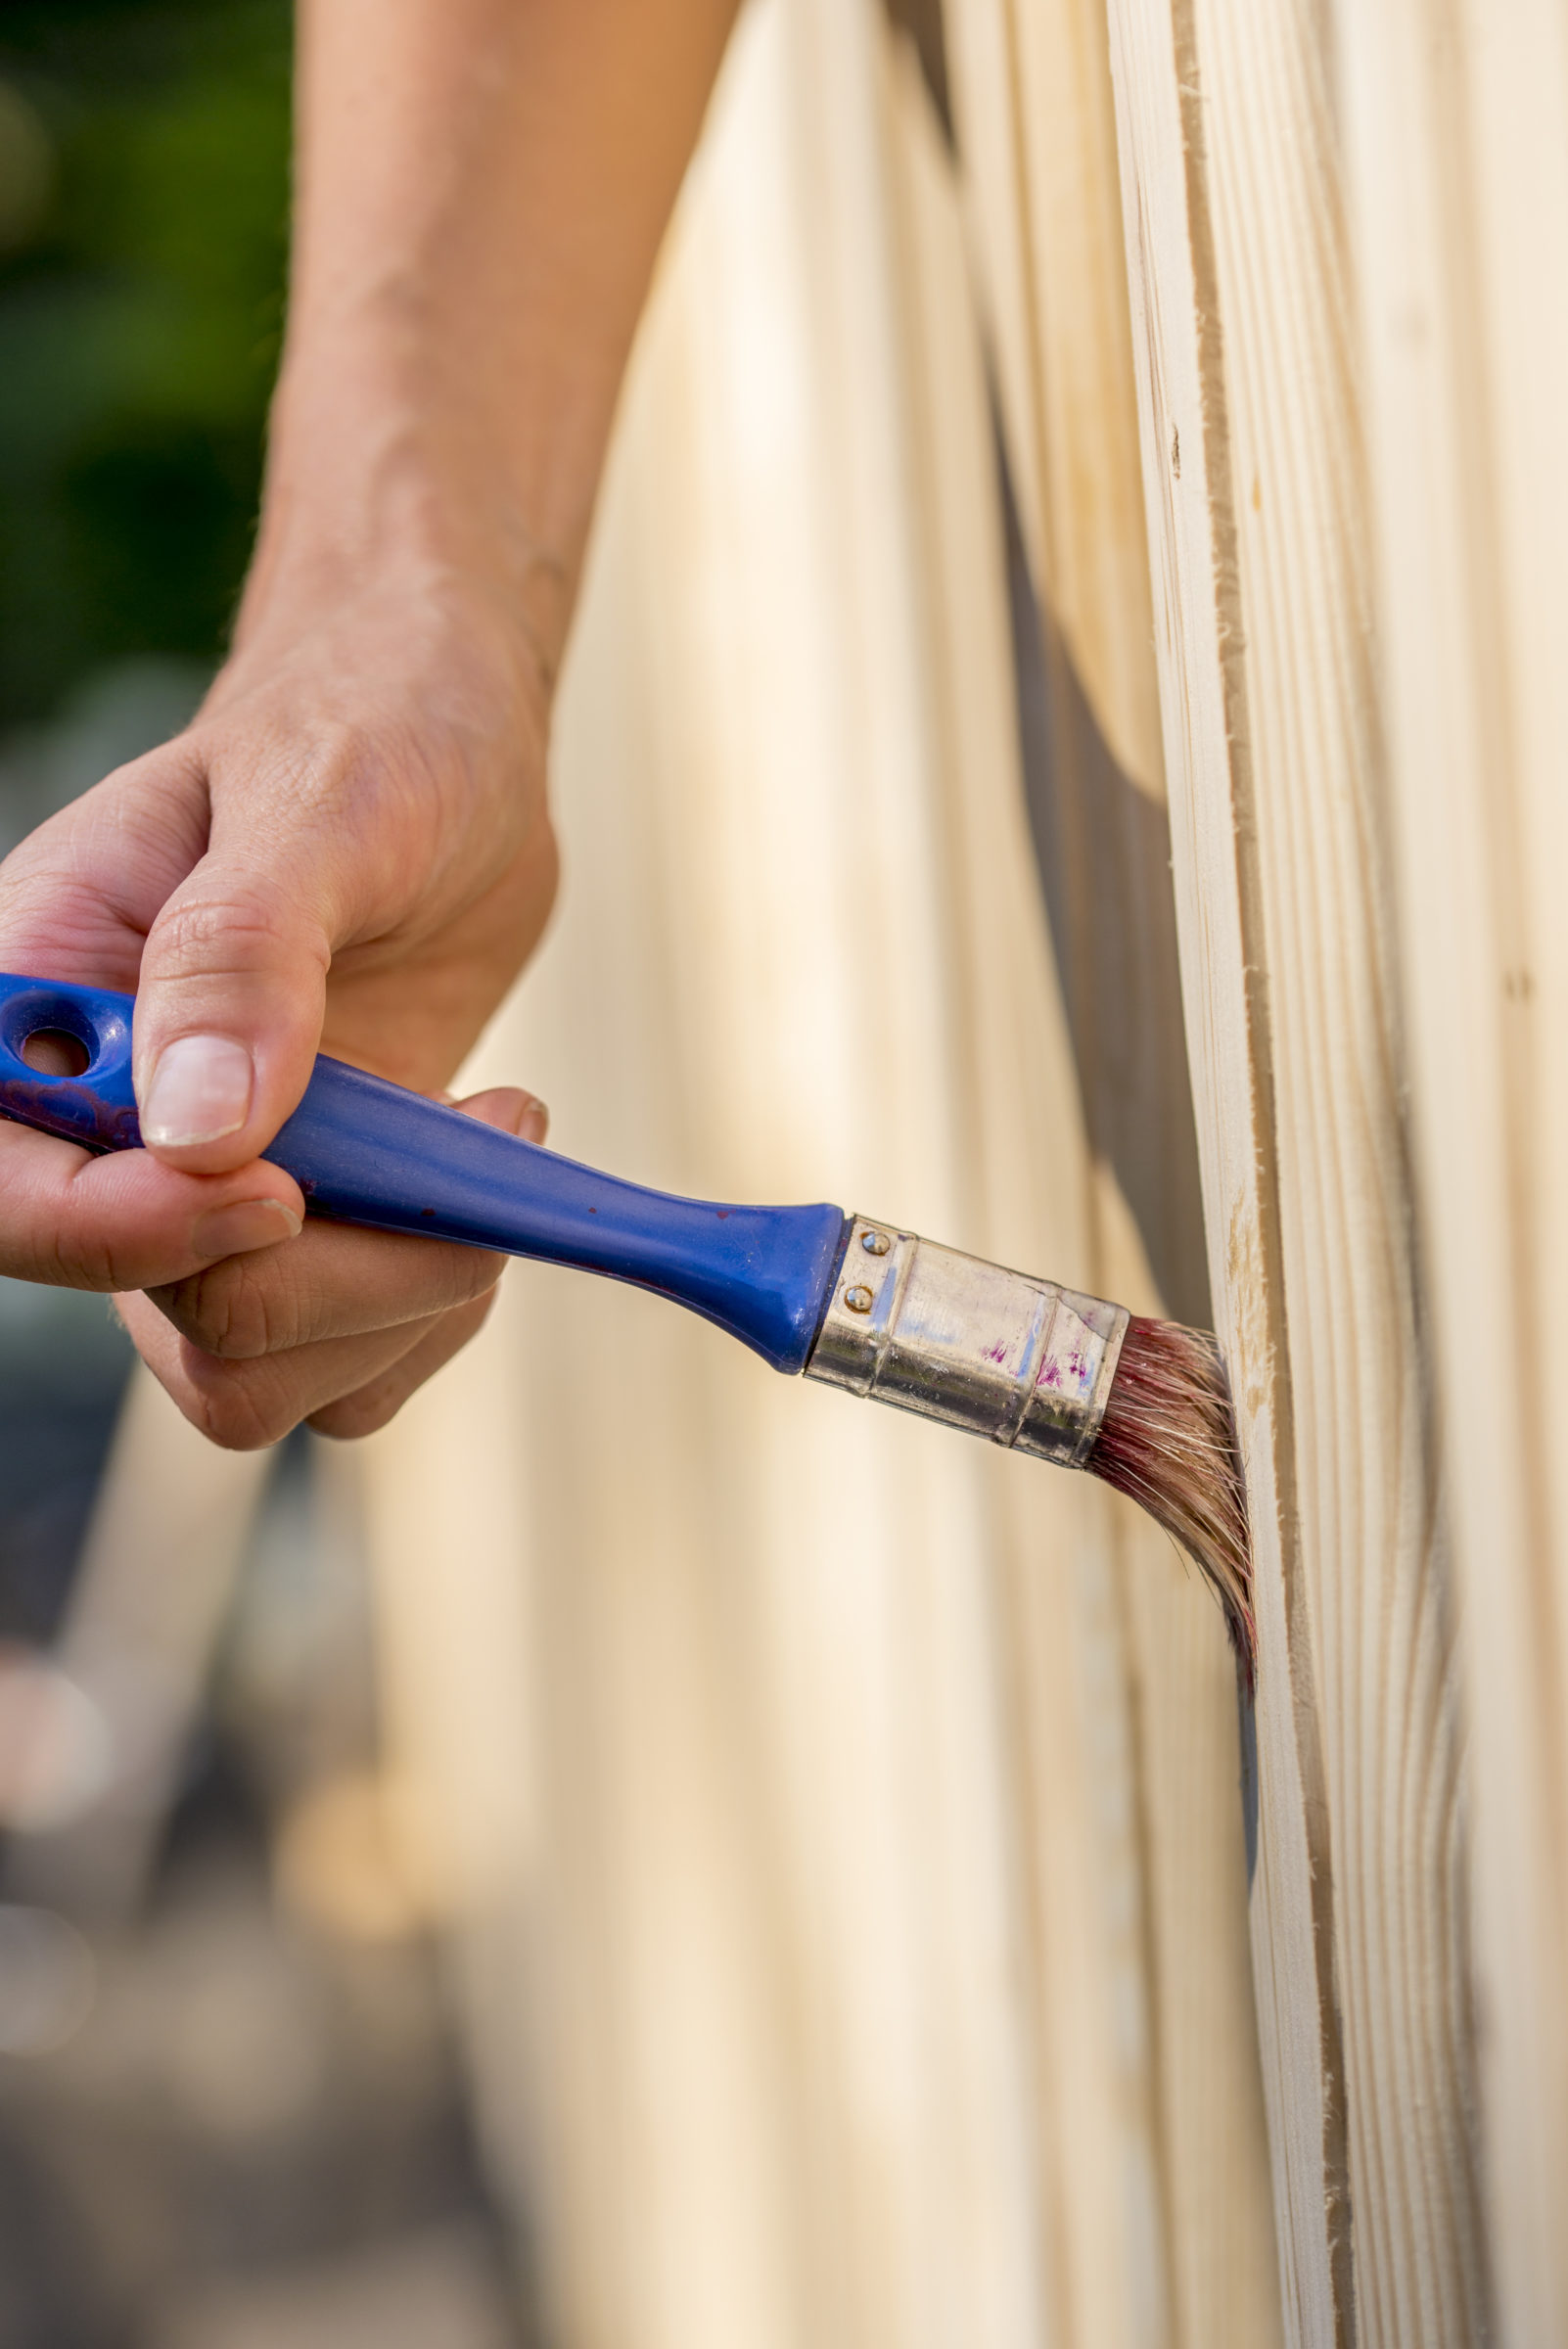 person varnishing an exterior garden fence 2021 08 26 22 28 00 utc